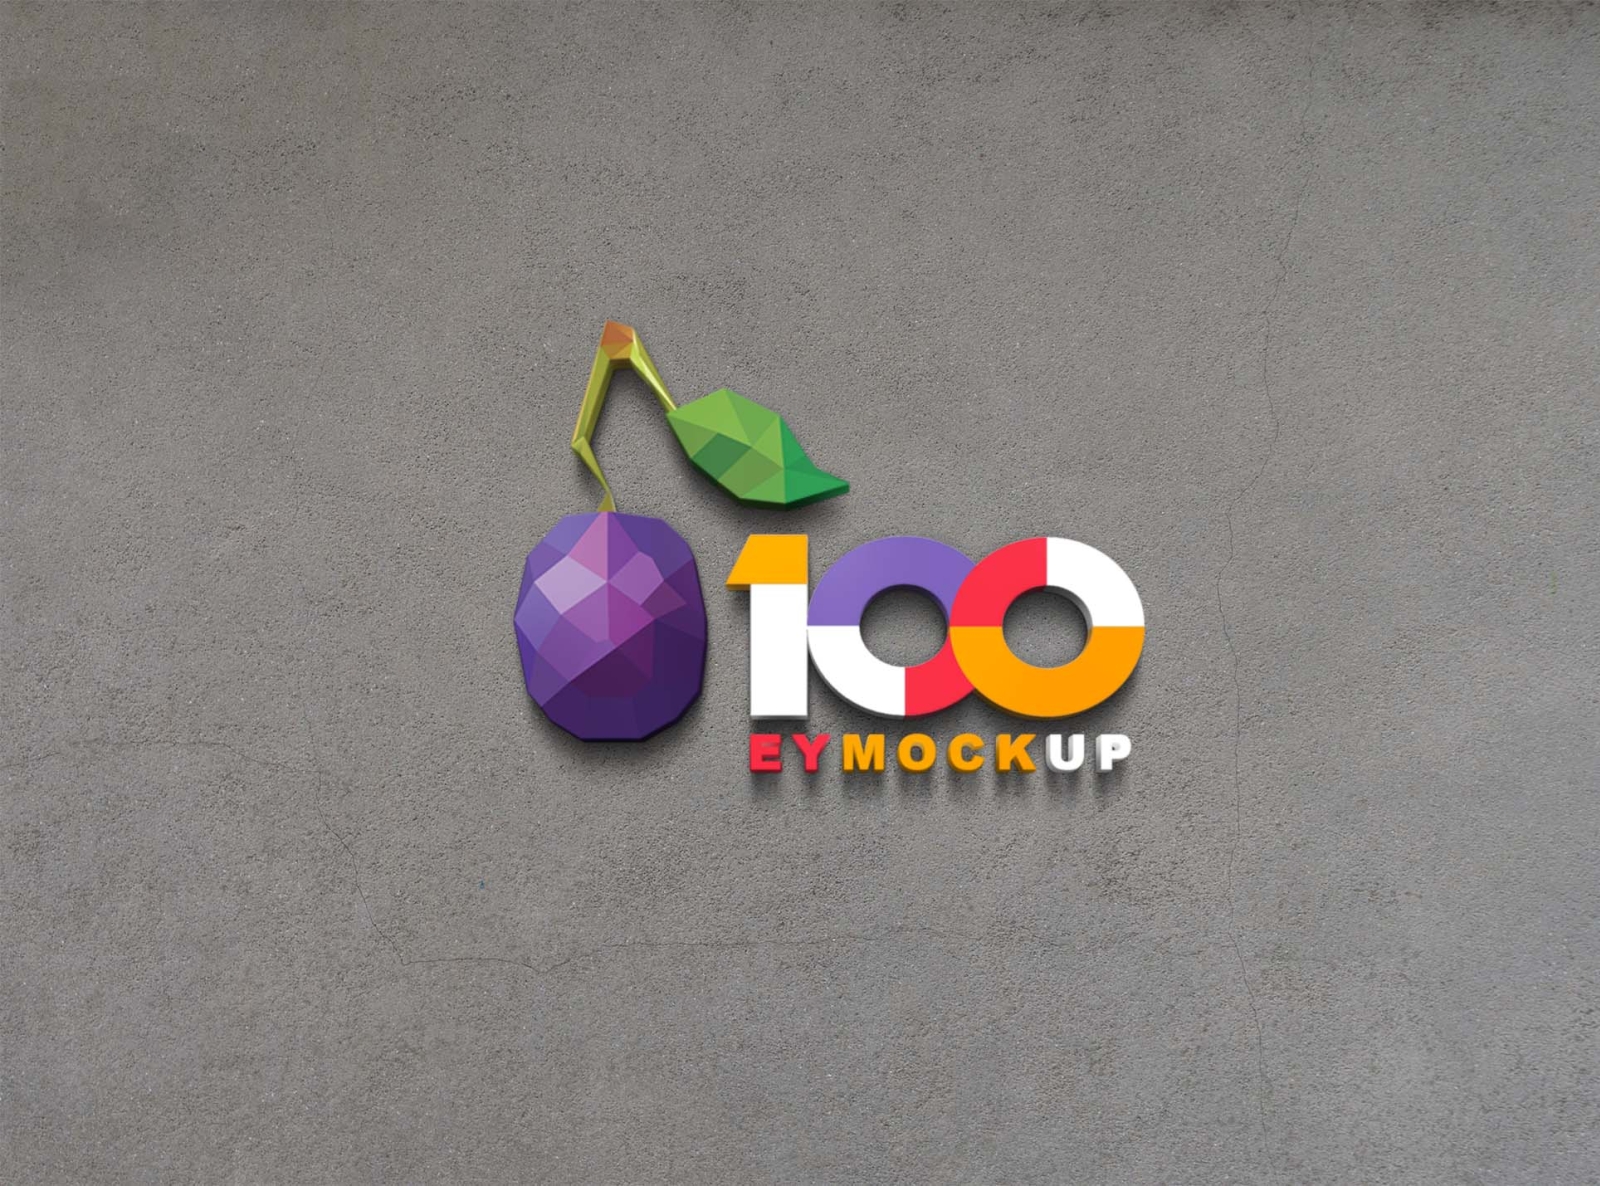 Download Free New 3d Logo Mockup By Anjum On Dribbble PSD Mockup Templates